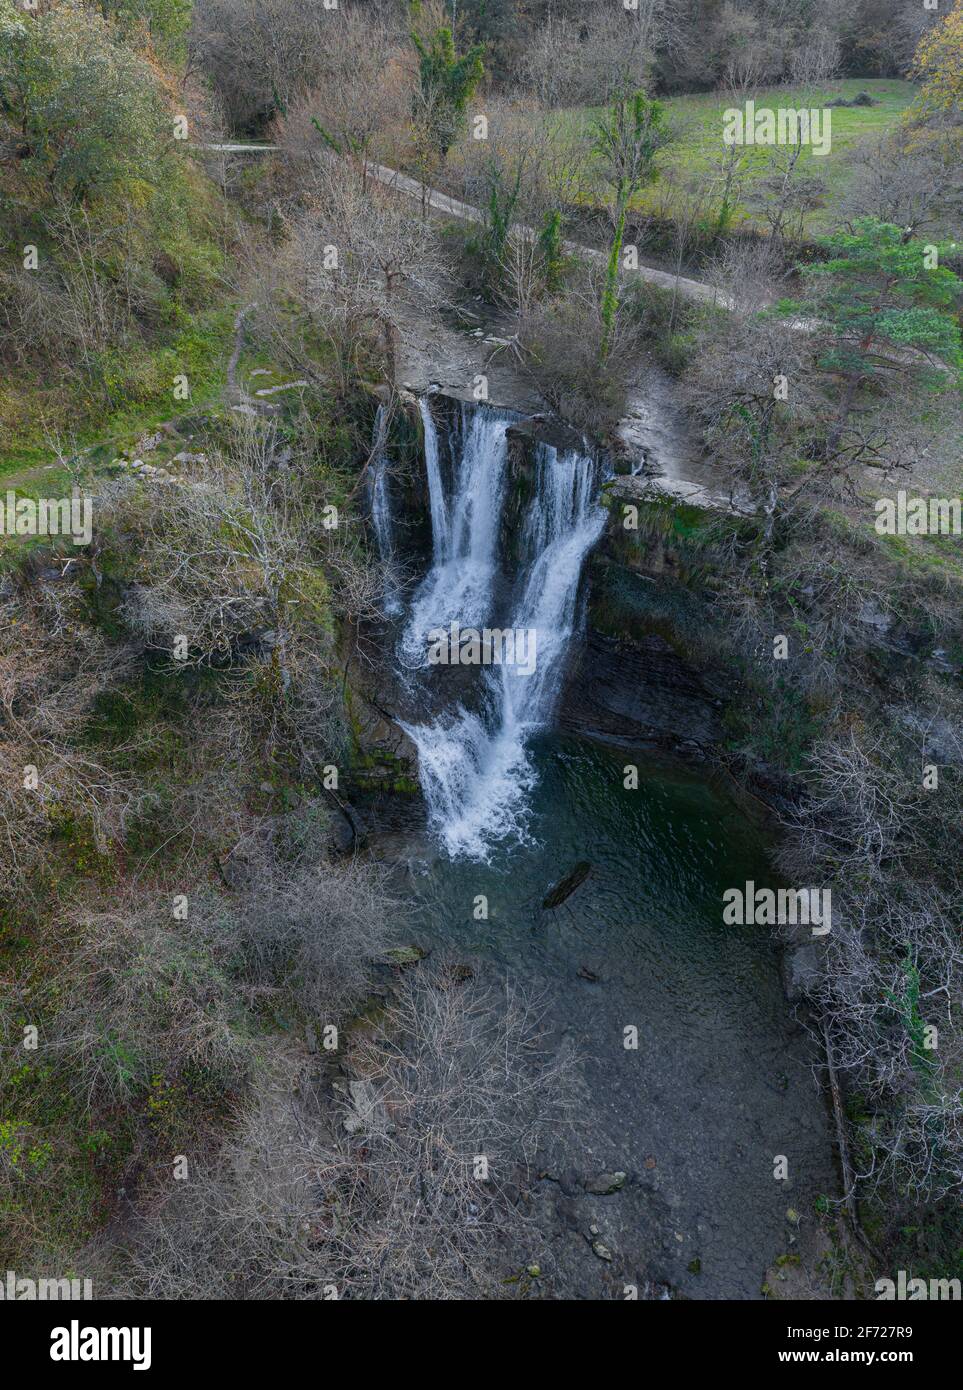 Waterfall of Penaladros in Cozuela aerial view, Burgos, Spain Stock Photo